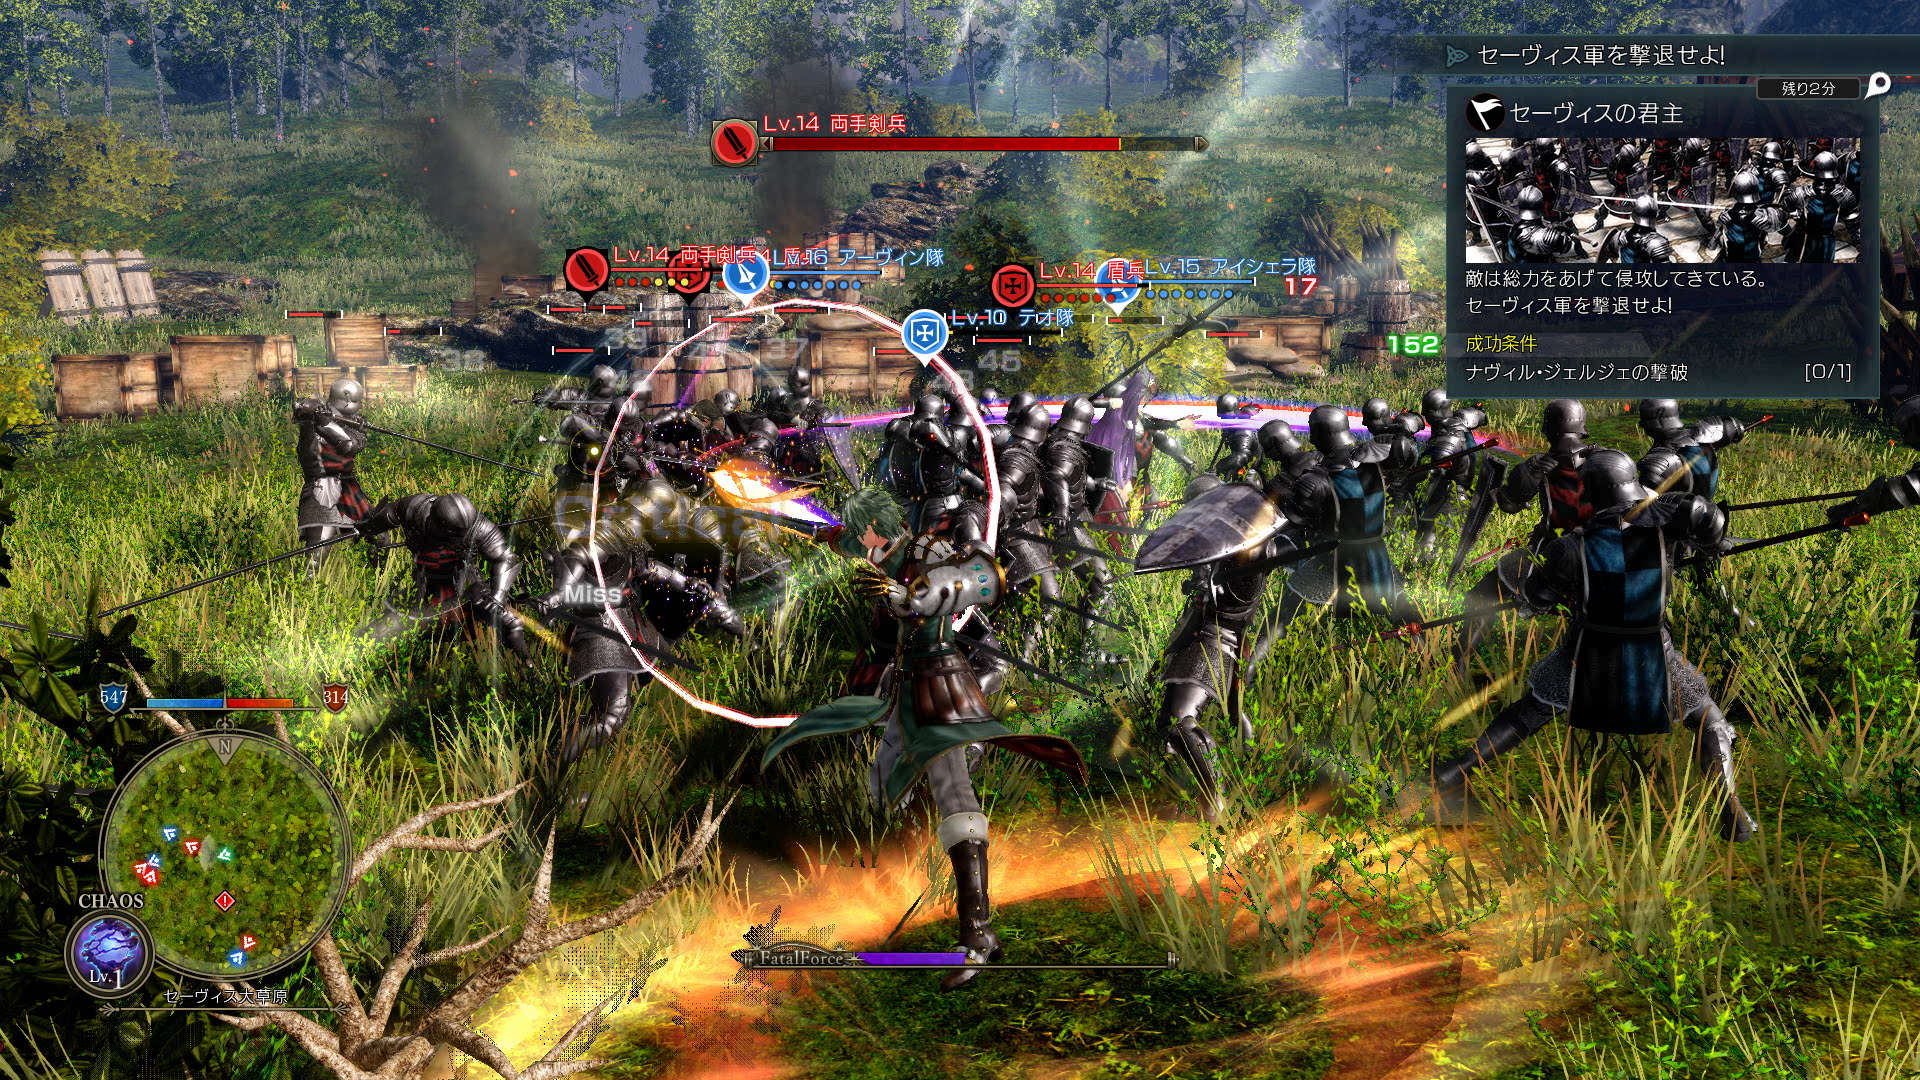 Qoo News] Mobile action RPG Record of Grancrest War: Quartet of